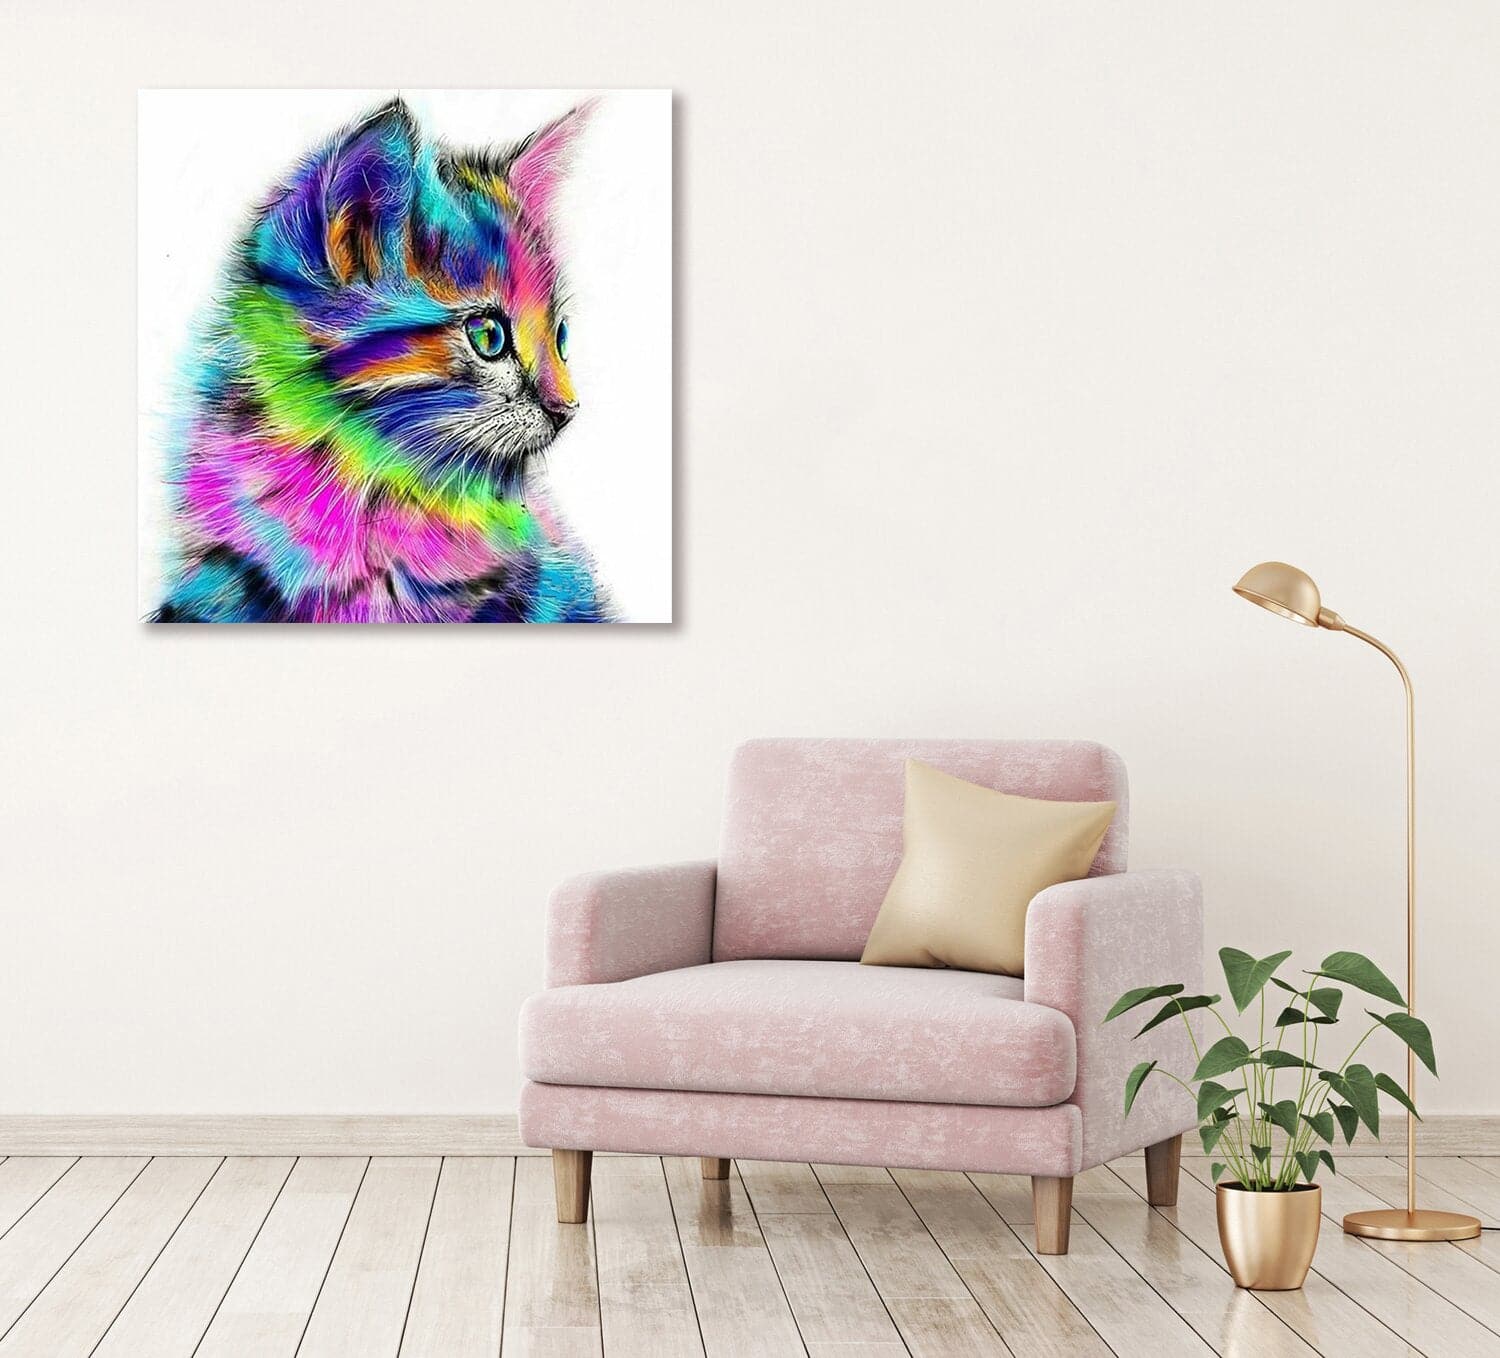 Framed 1 Panel - Rainbow cat